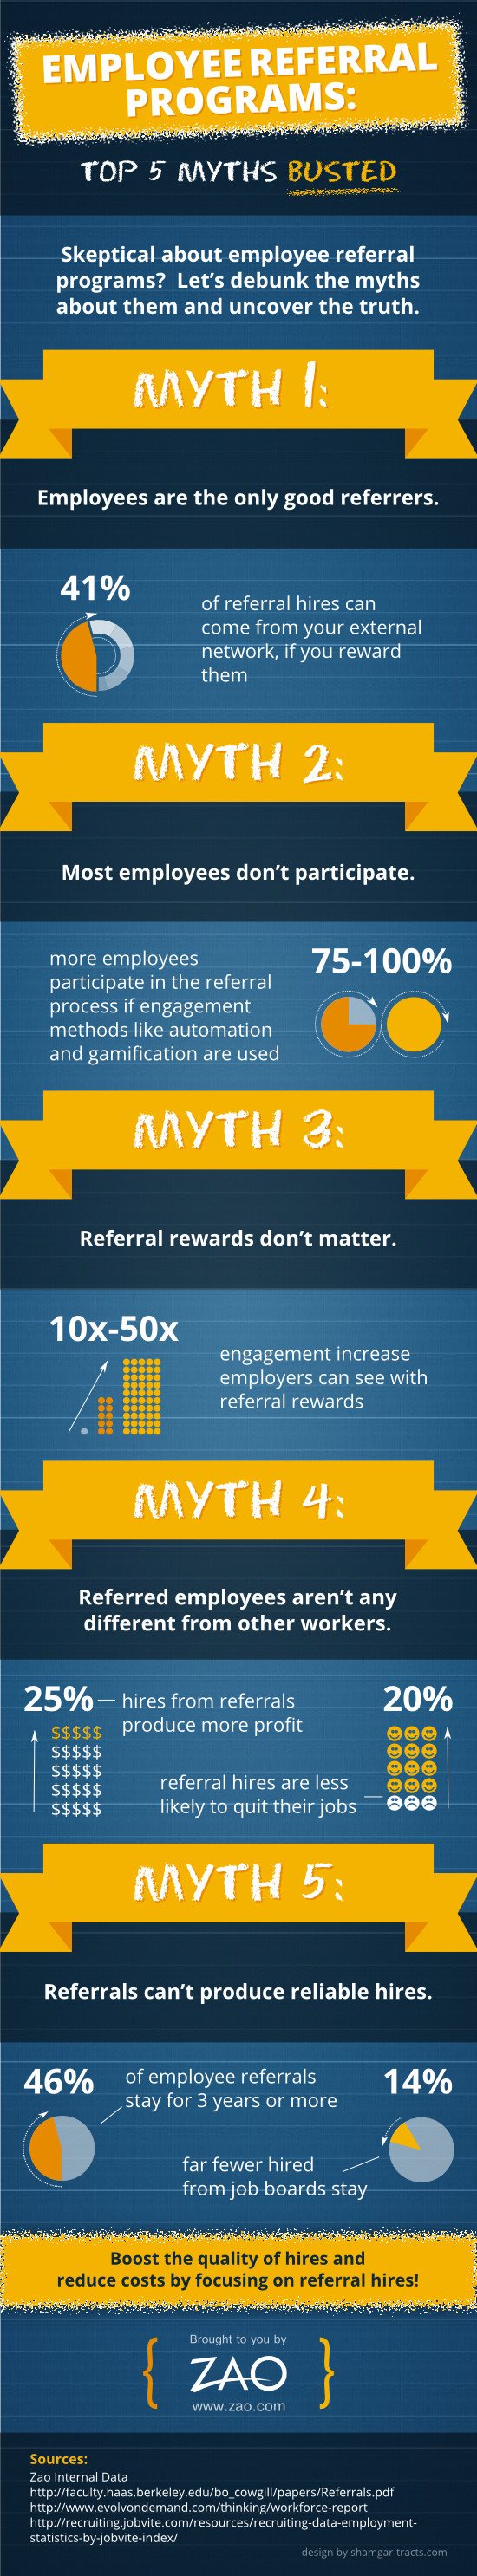 referral myths